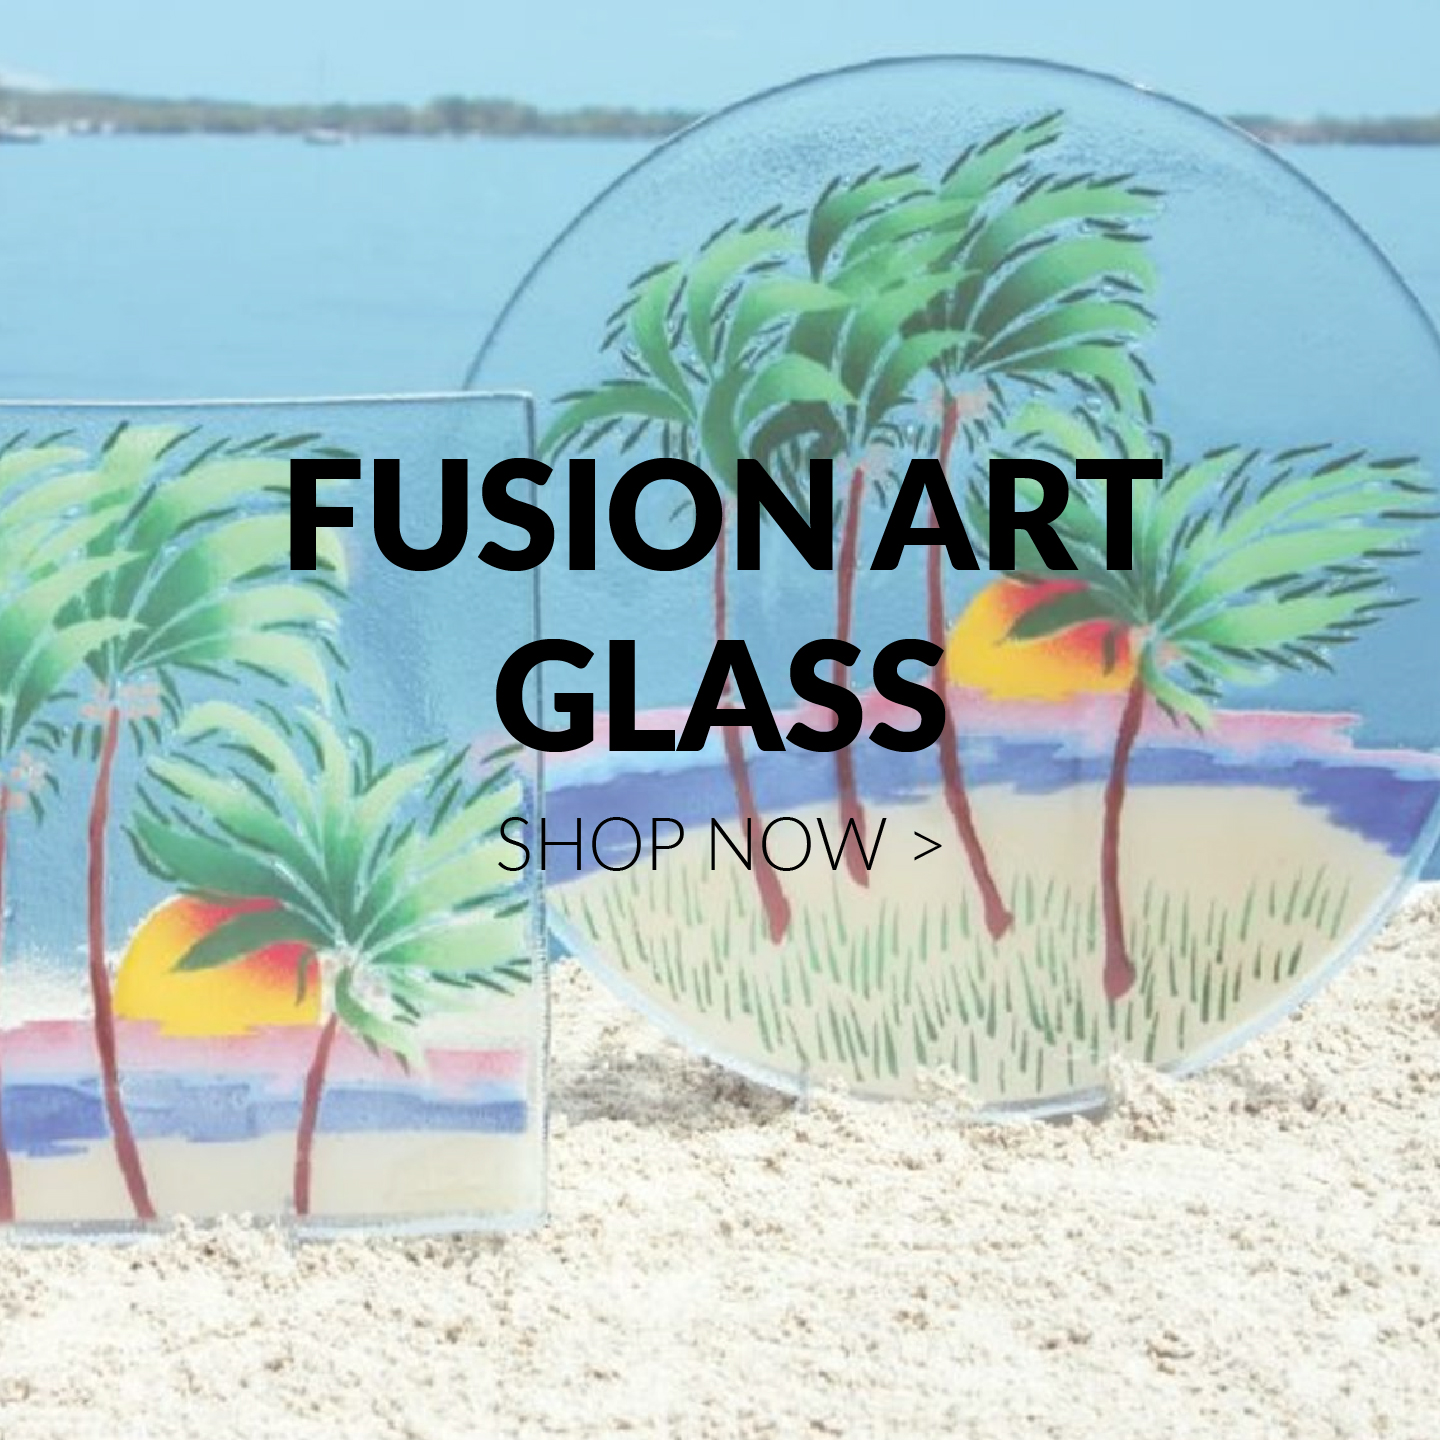 Fusion Art Glass by William McGrath